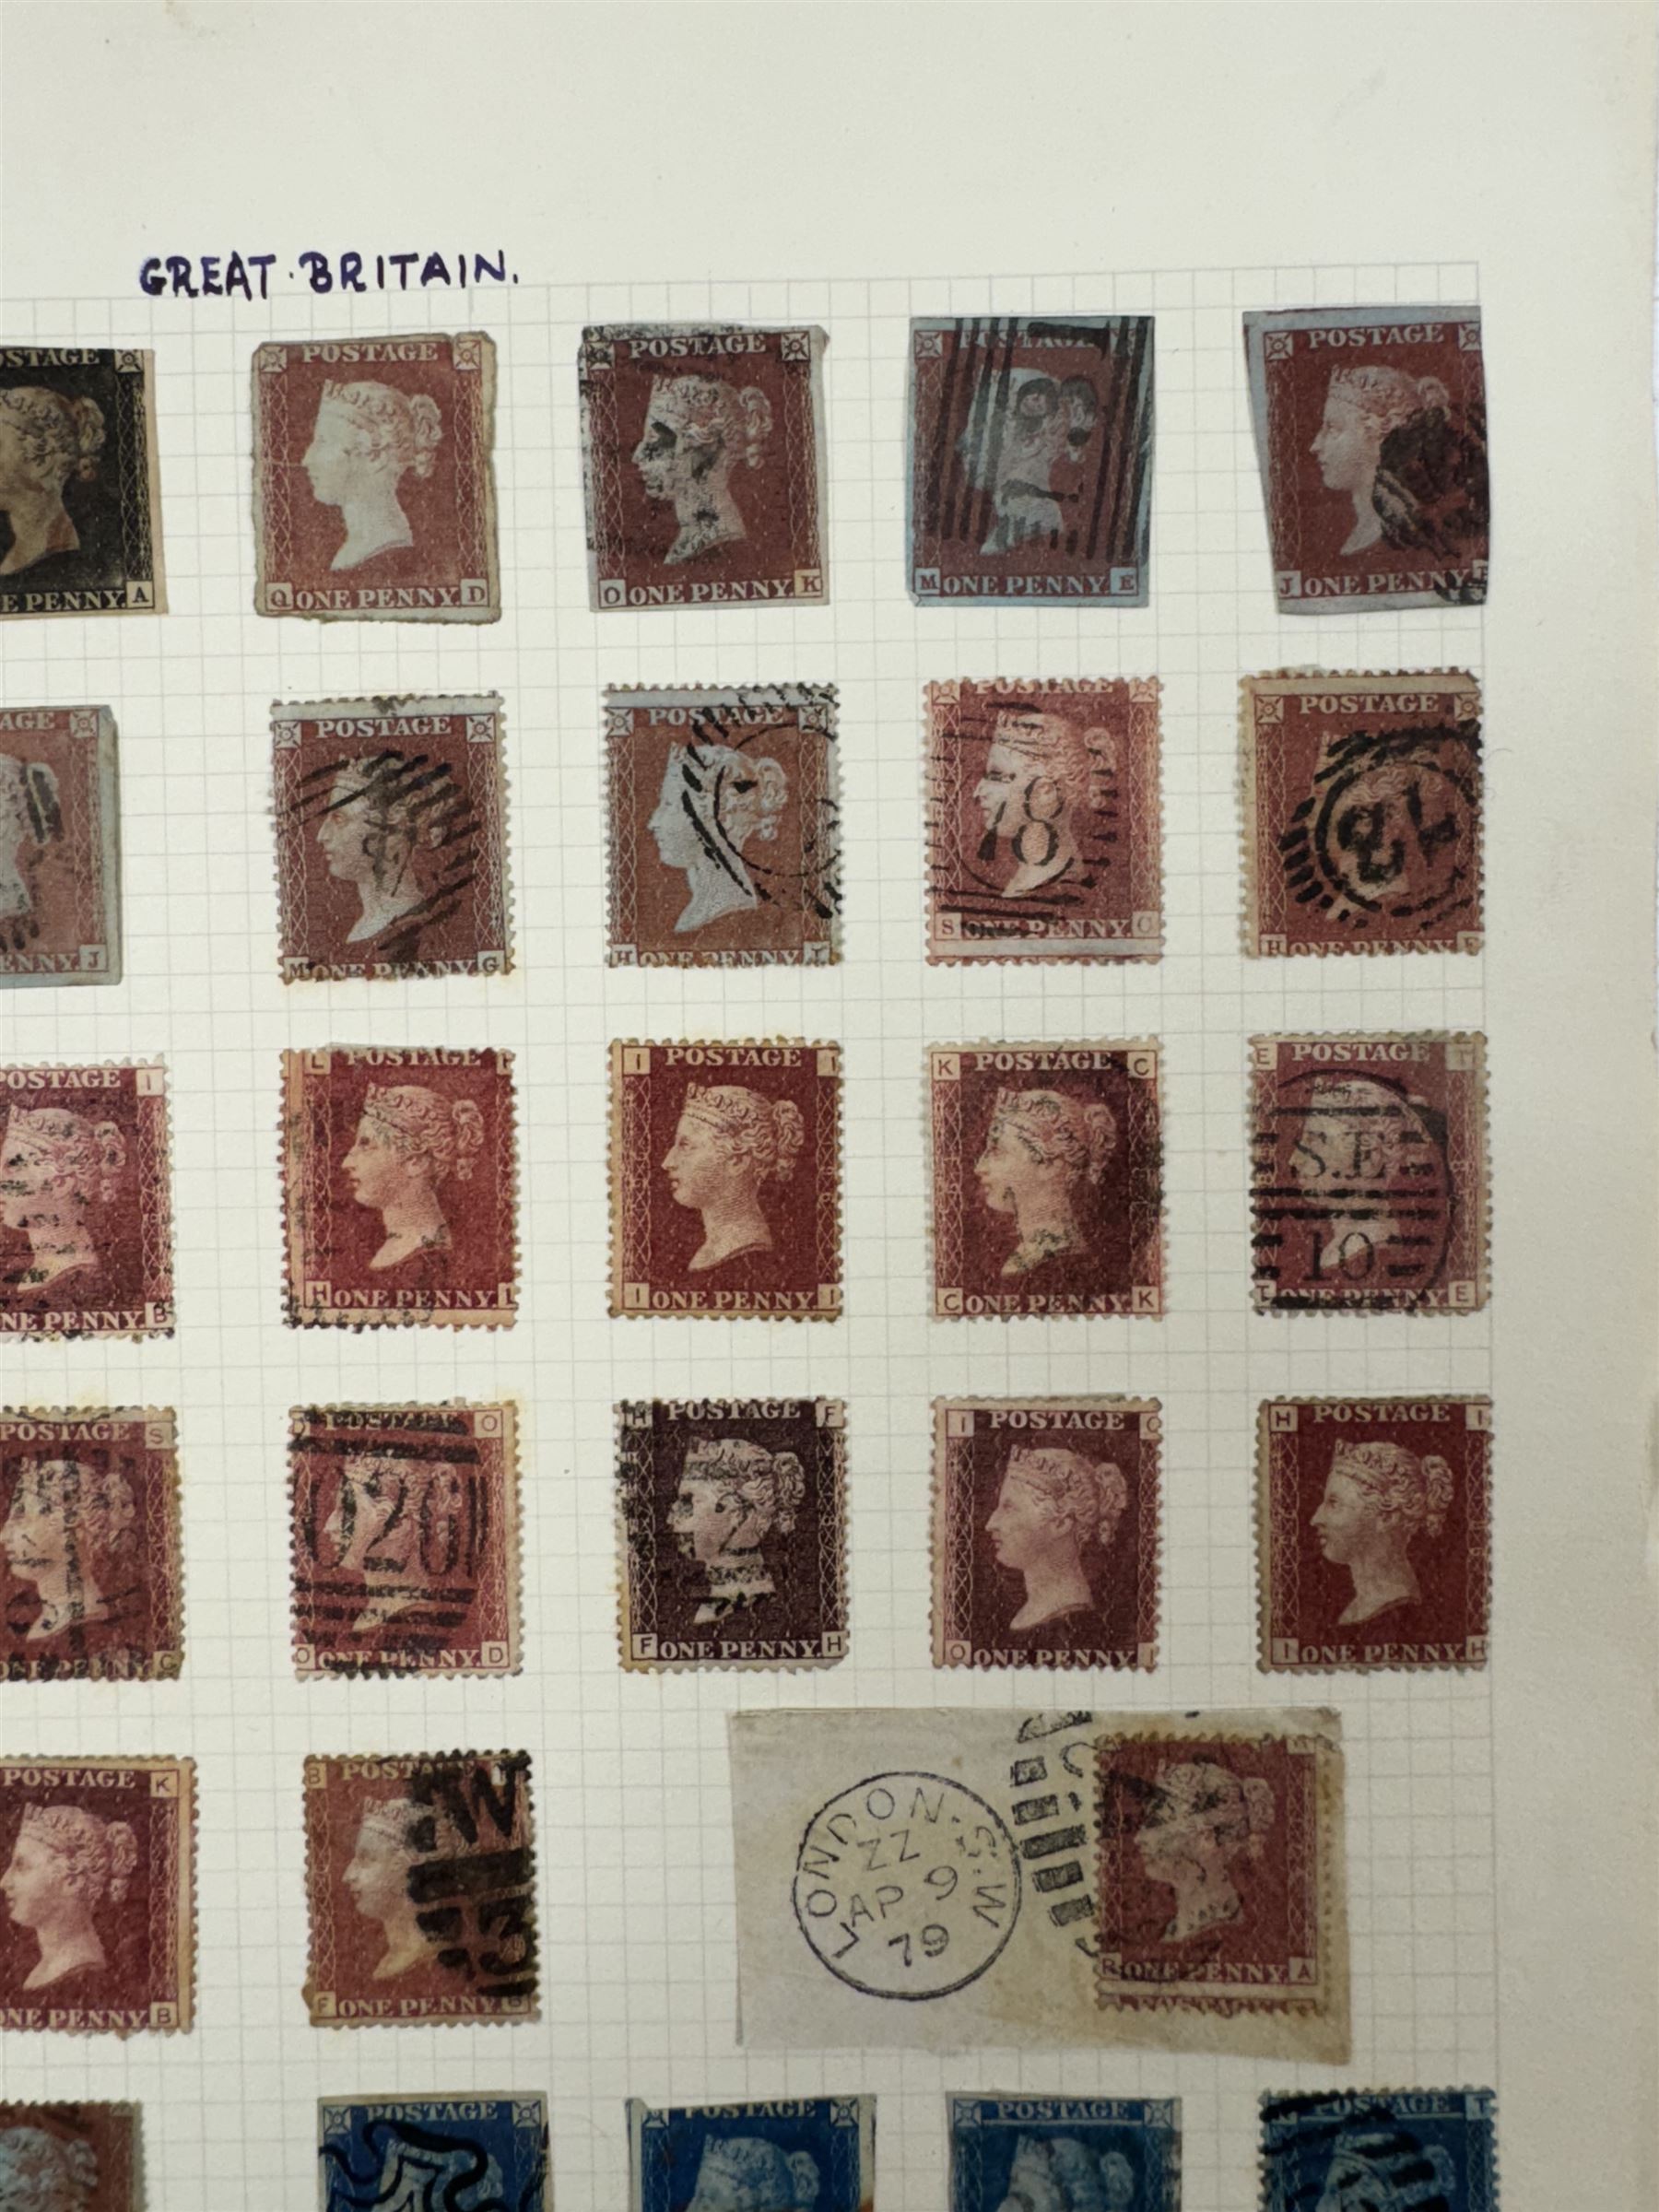 Great British Queen Victoria stamps - Image 3 of 4